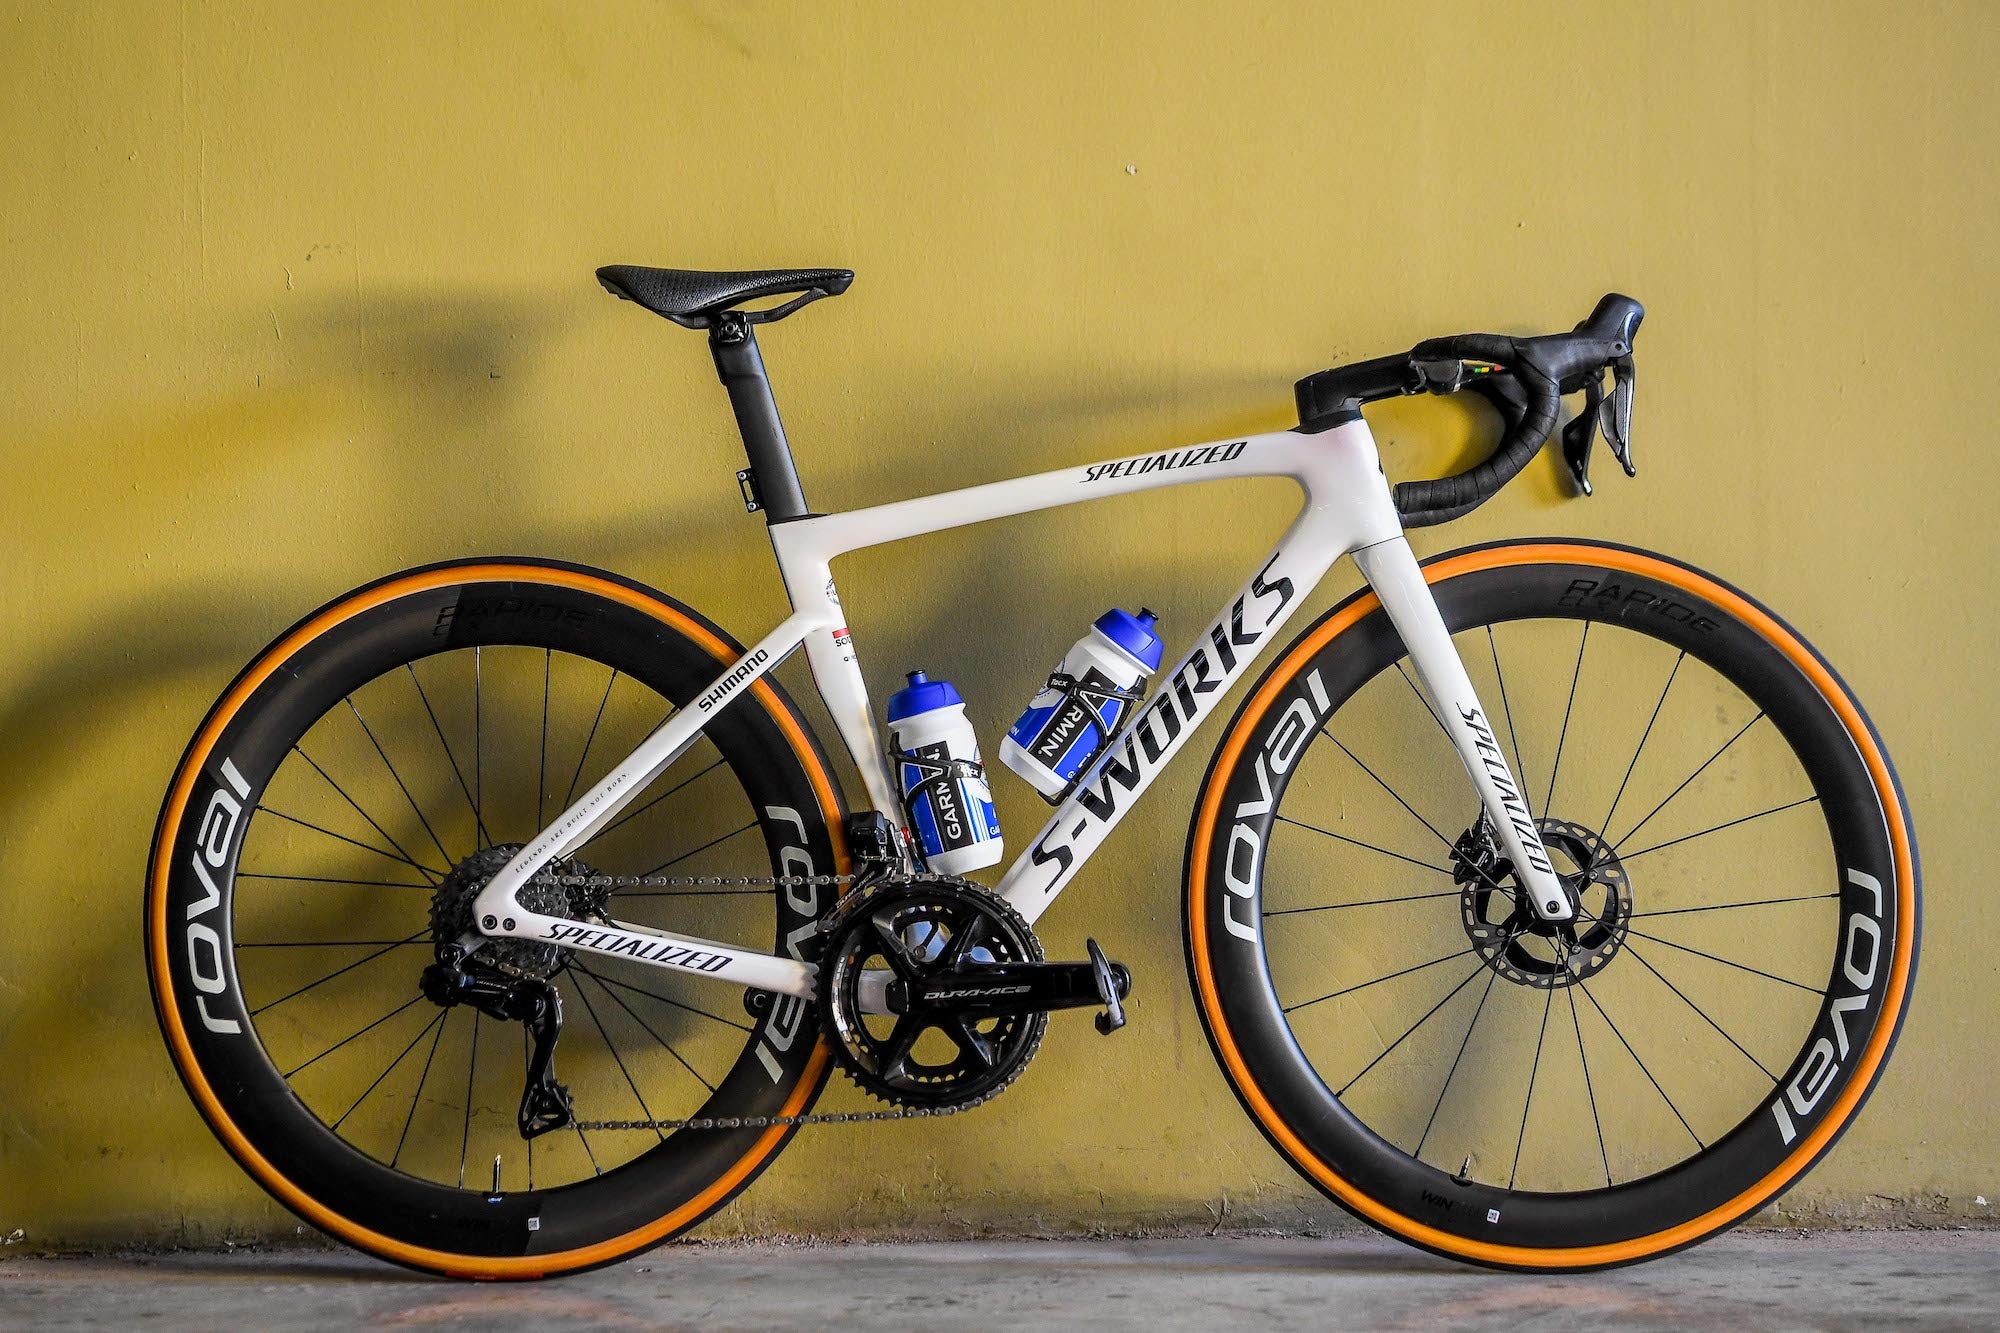 Pro bike: Remco Evenepoel's custom world champion's S-Works Tarmac